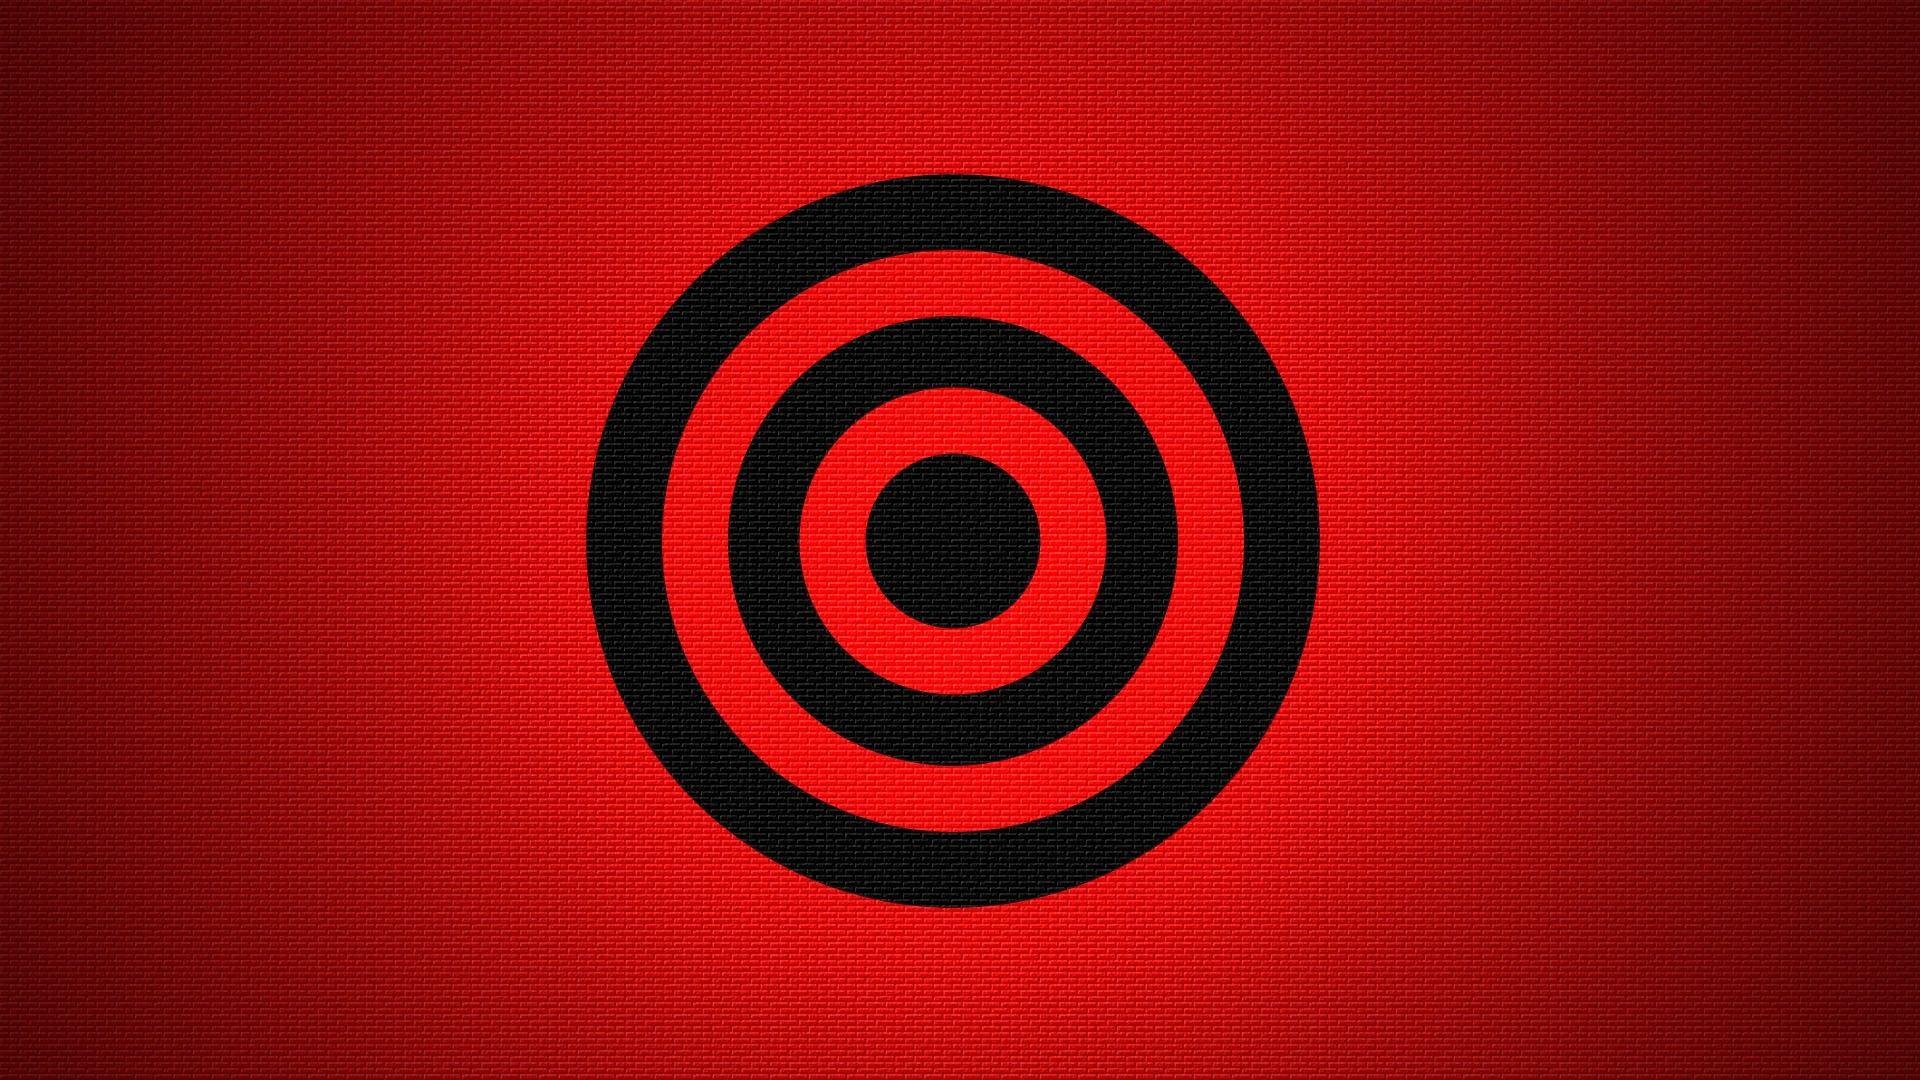 Black Target Circle Logo - Black target on a red background wallpaper and image